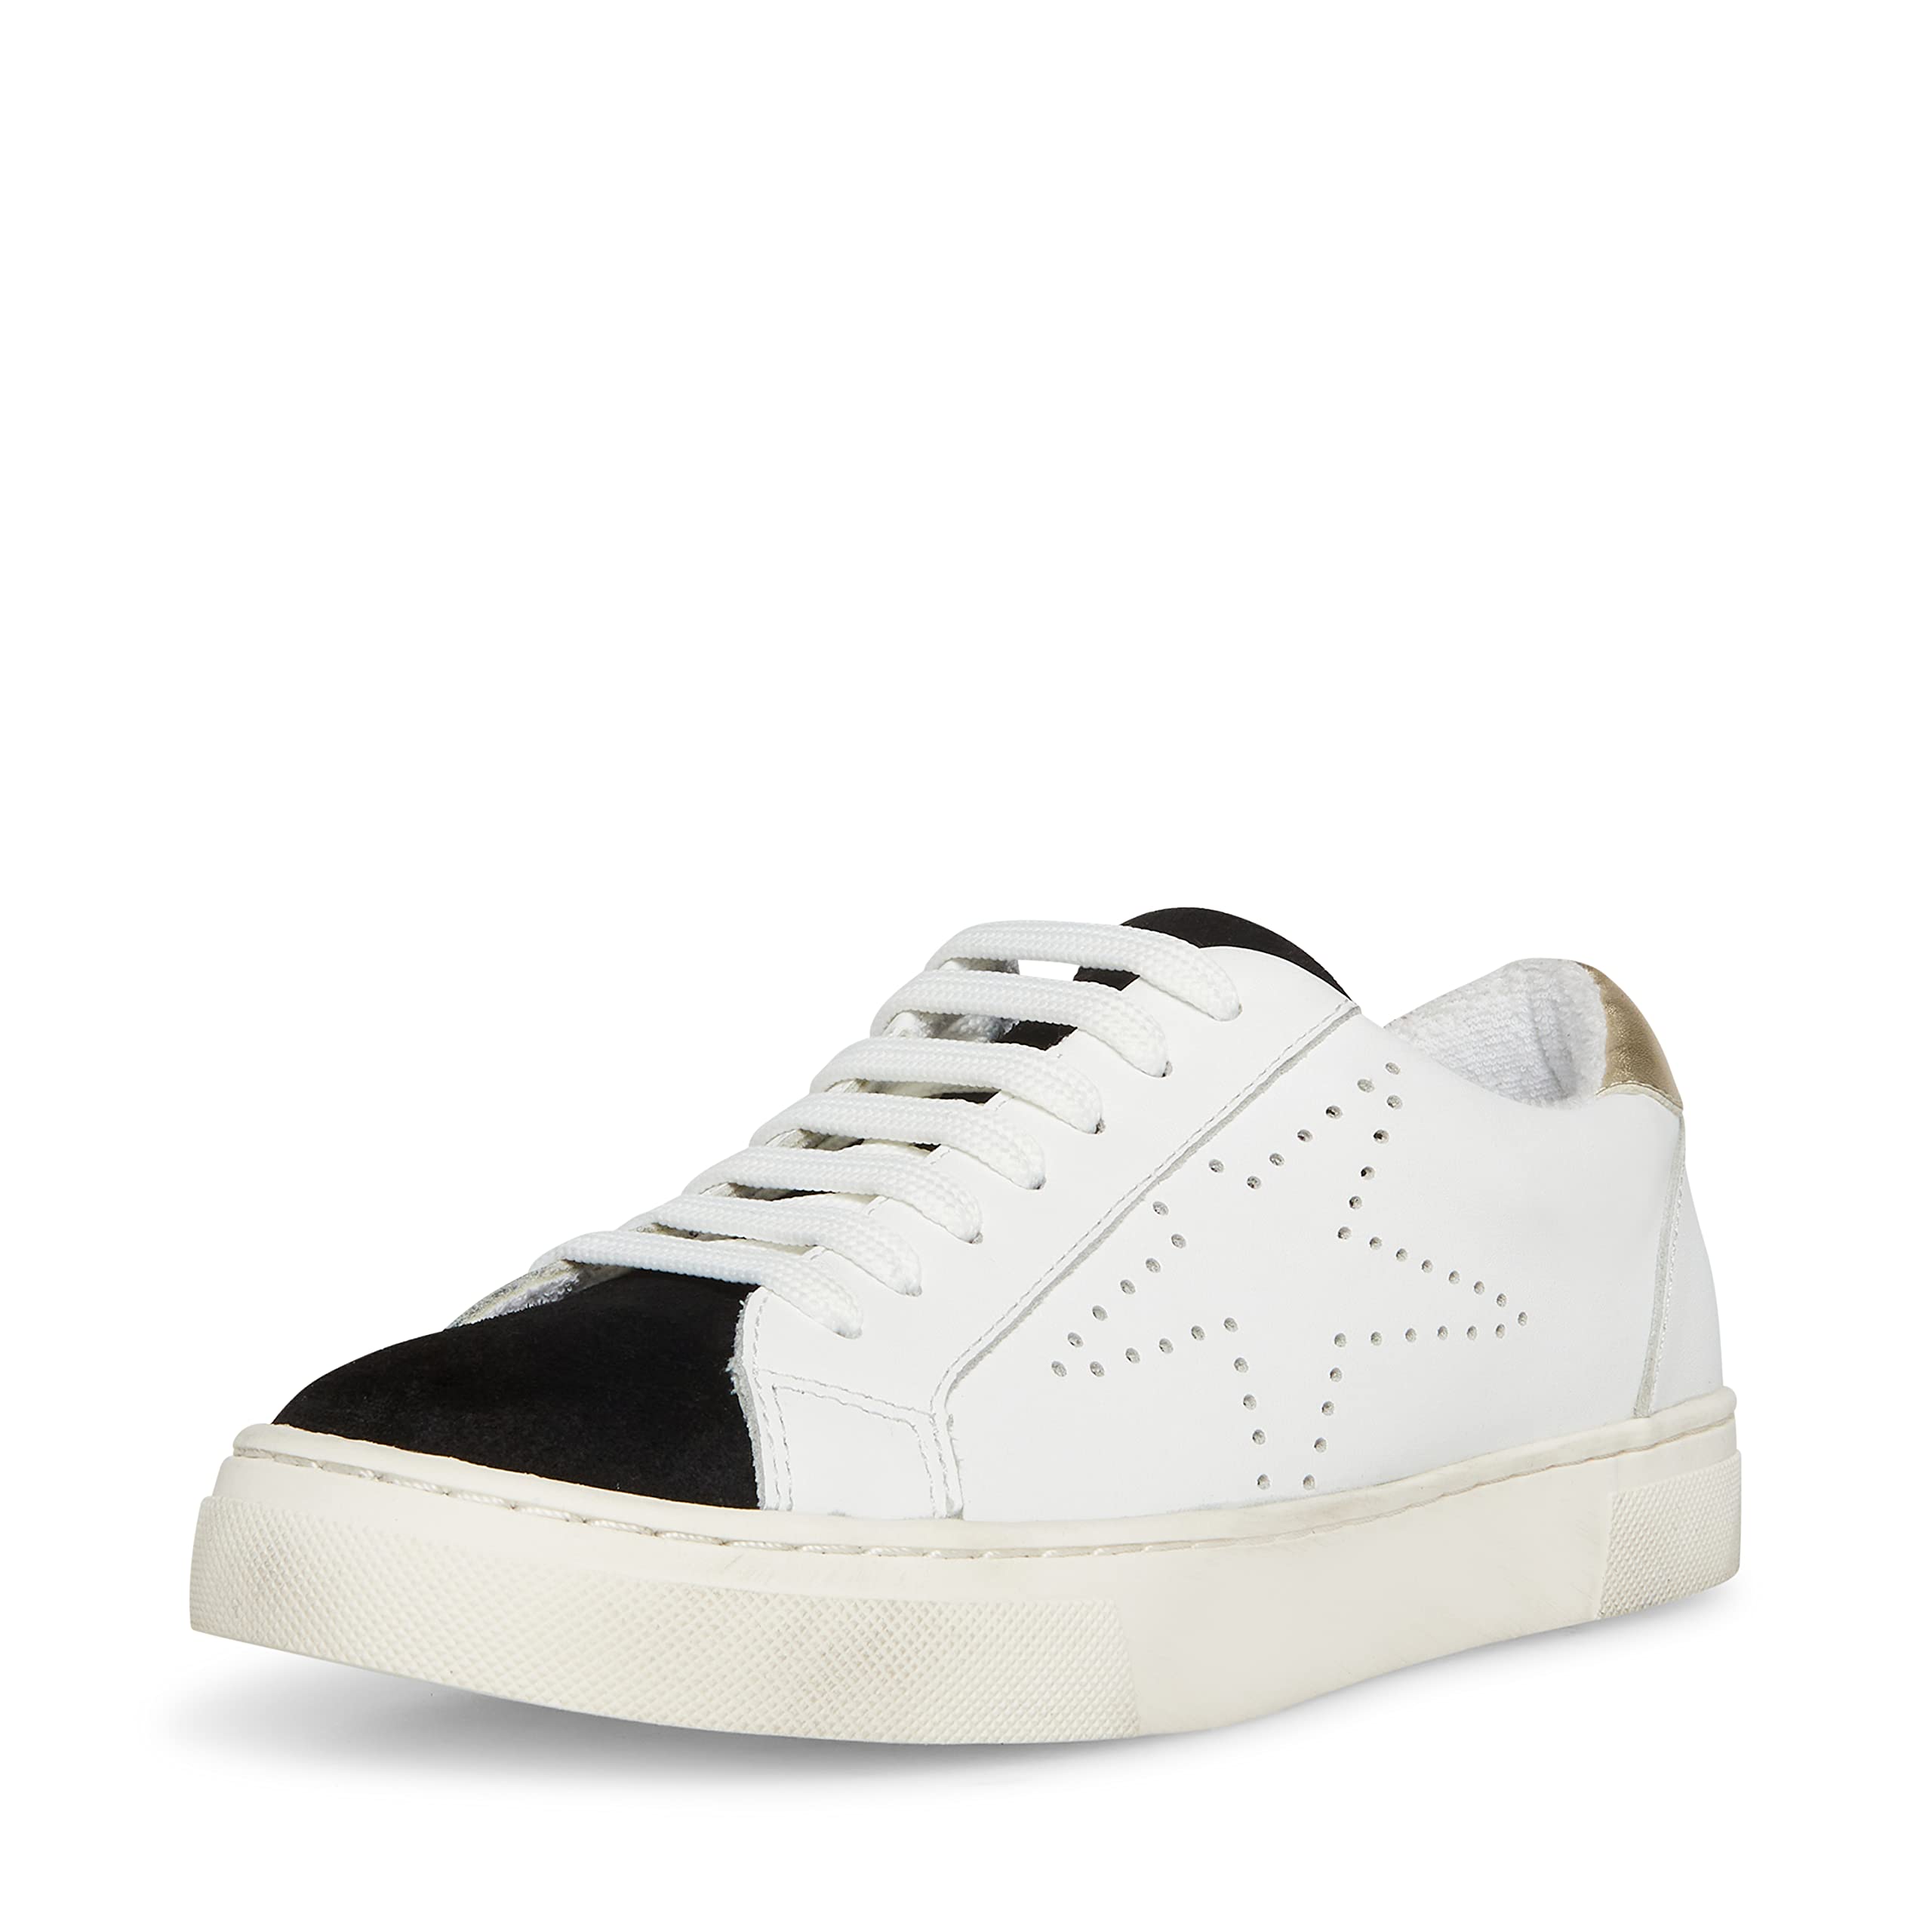 Promotions Steve Madden REZUME Leather Star Lace-up Low Top Sneakers White/Black (7, White/Black) LmPV7wXsk bien vendre